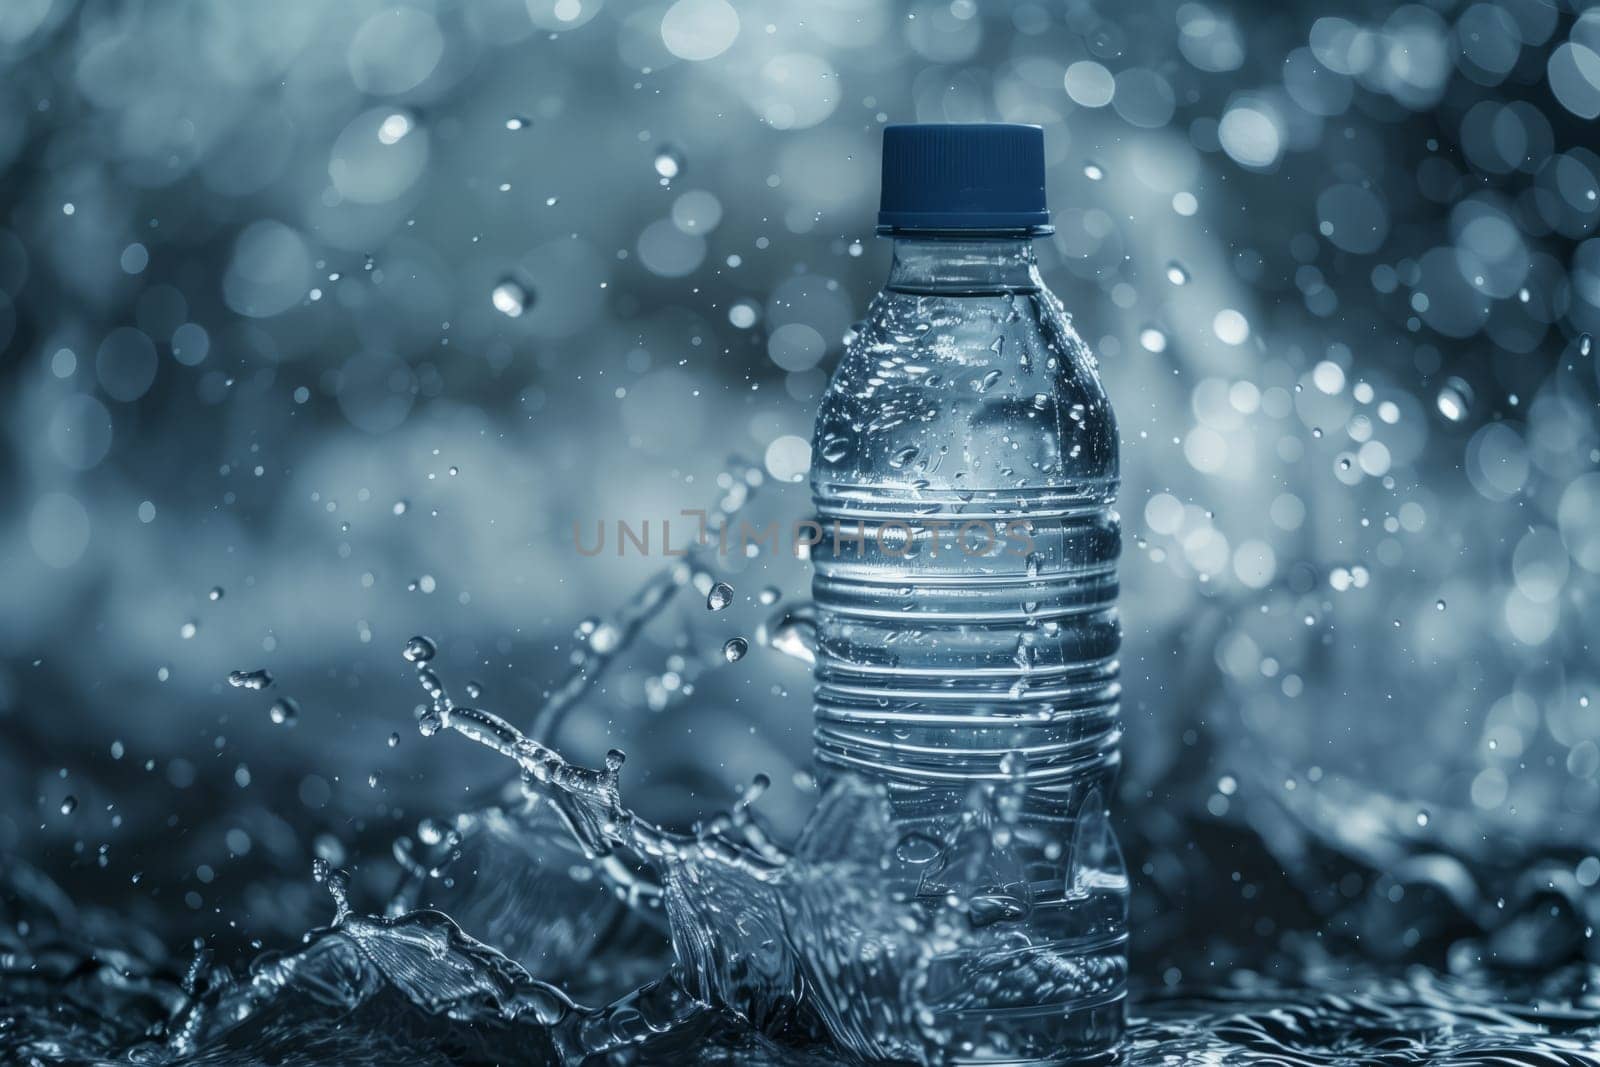 A plastic water bottle spills liquid onto the ground by richwolf